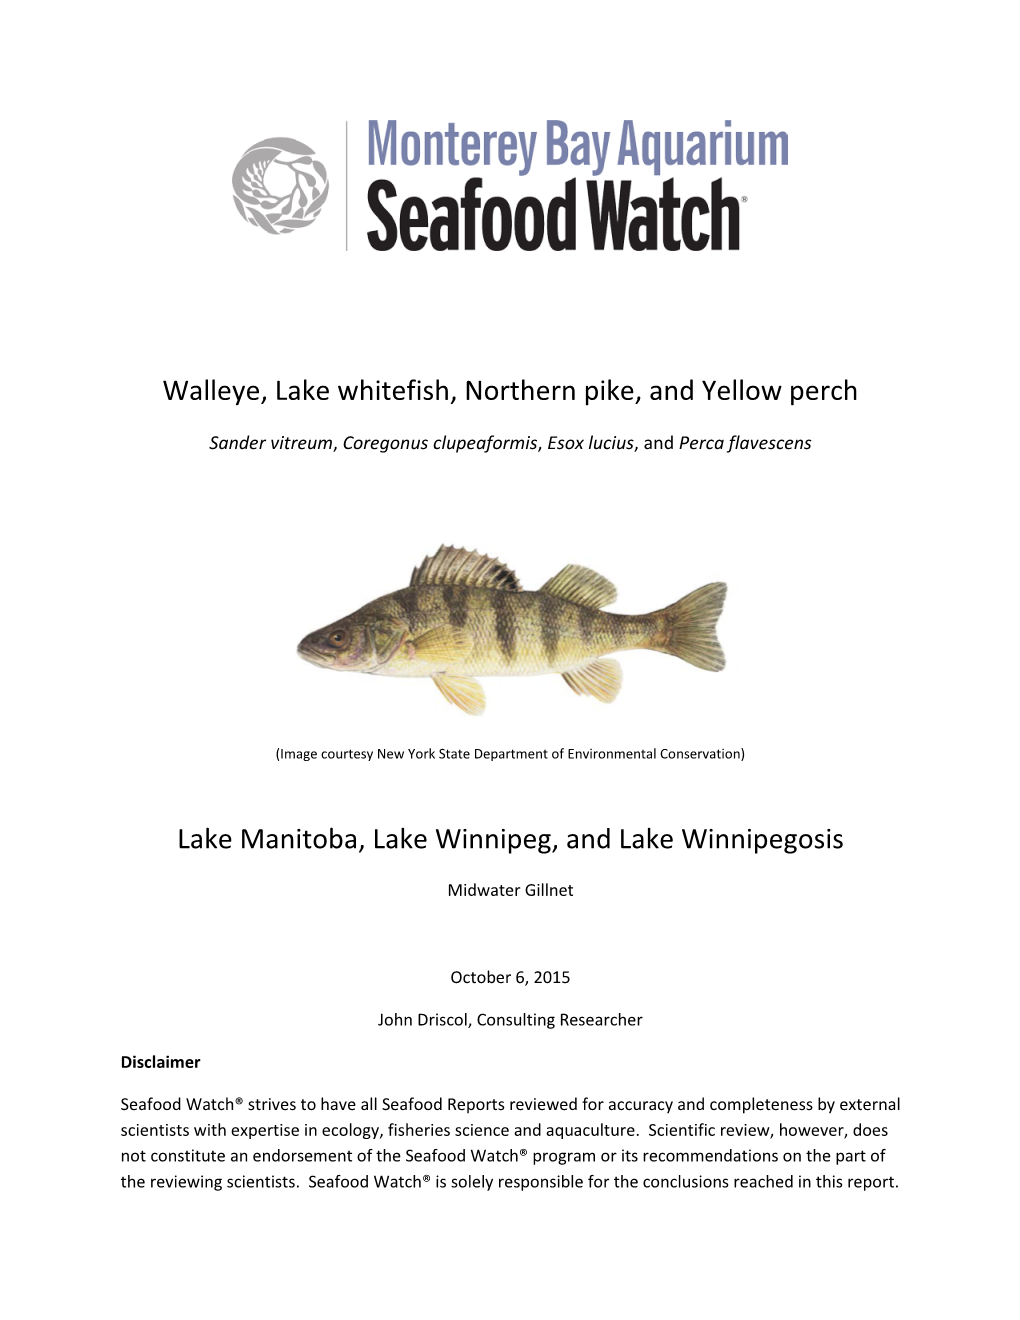 Walleye, Lake Whitefish, Northern Pike, and Yellow Perch